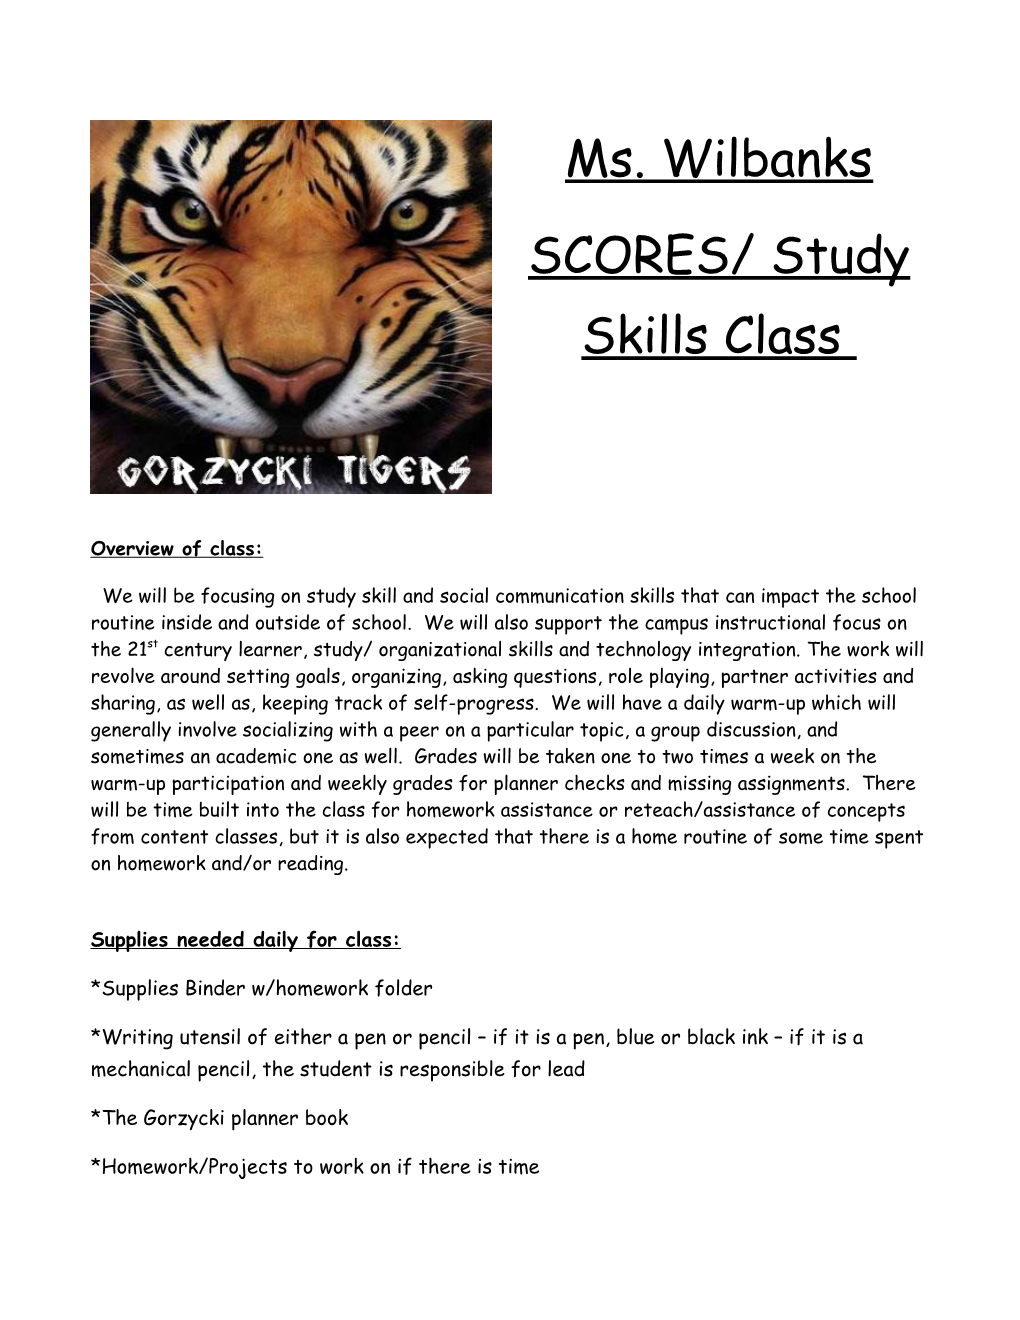 SCORES/ Study Skills Class